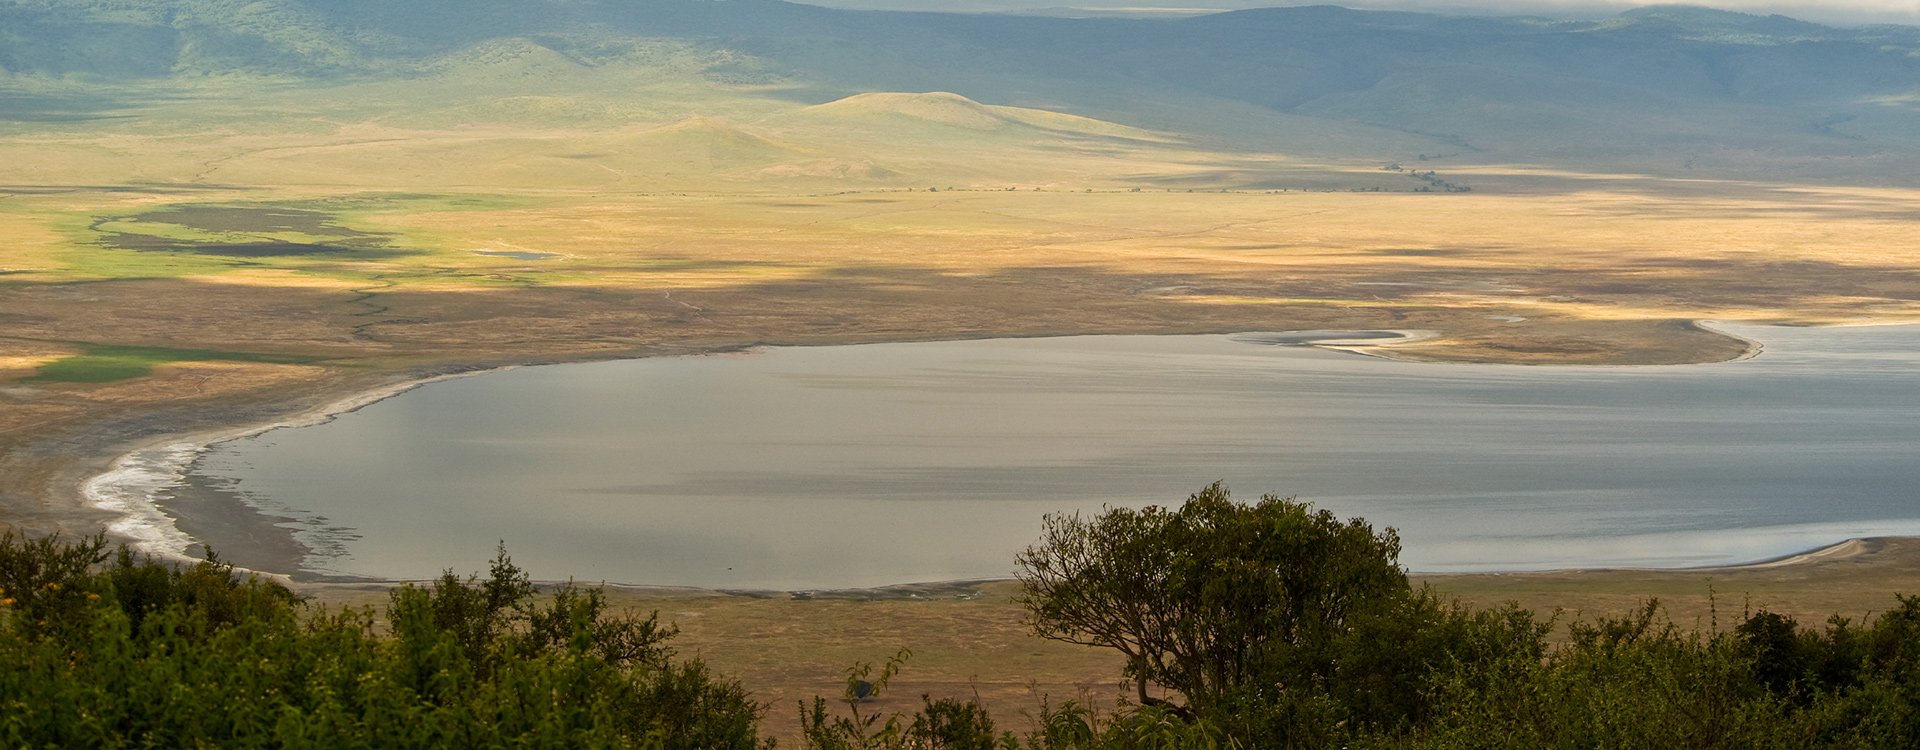 Tanzania_Ngorongoro Crater